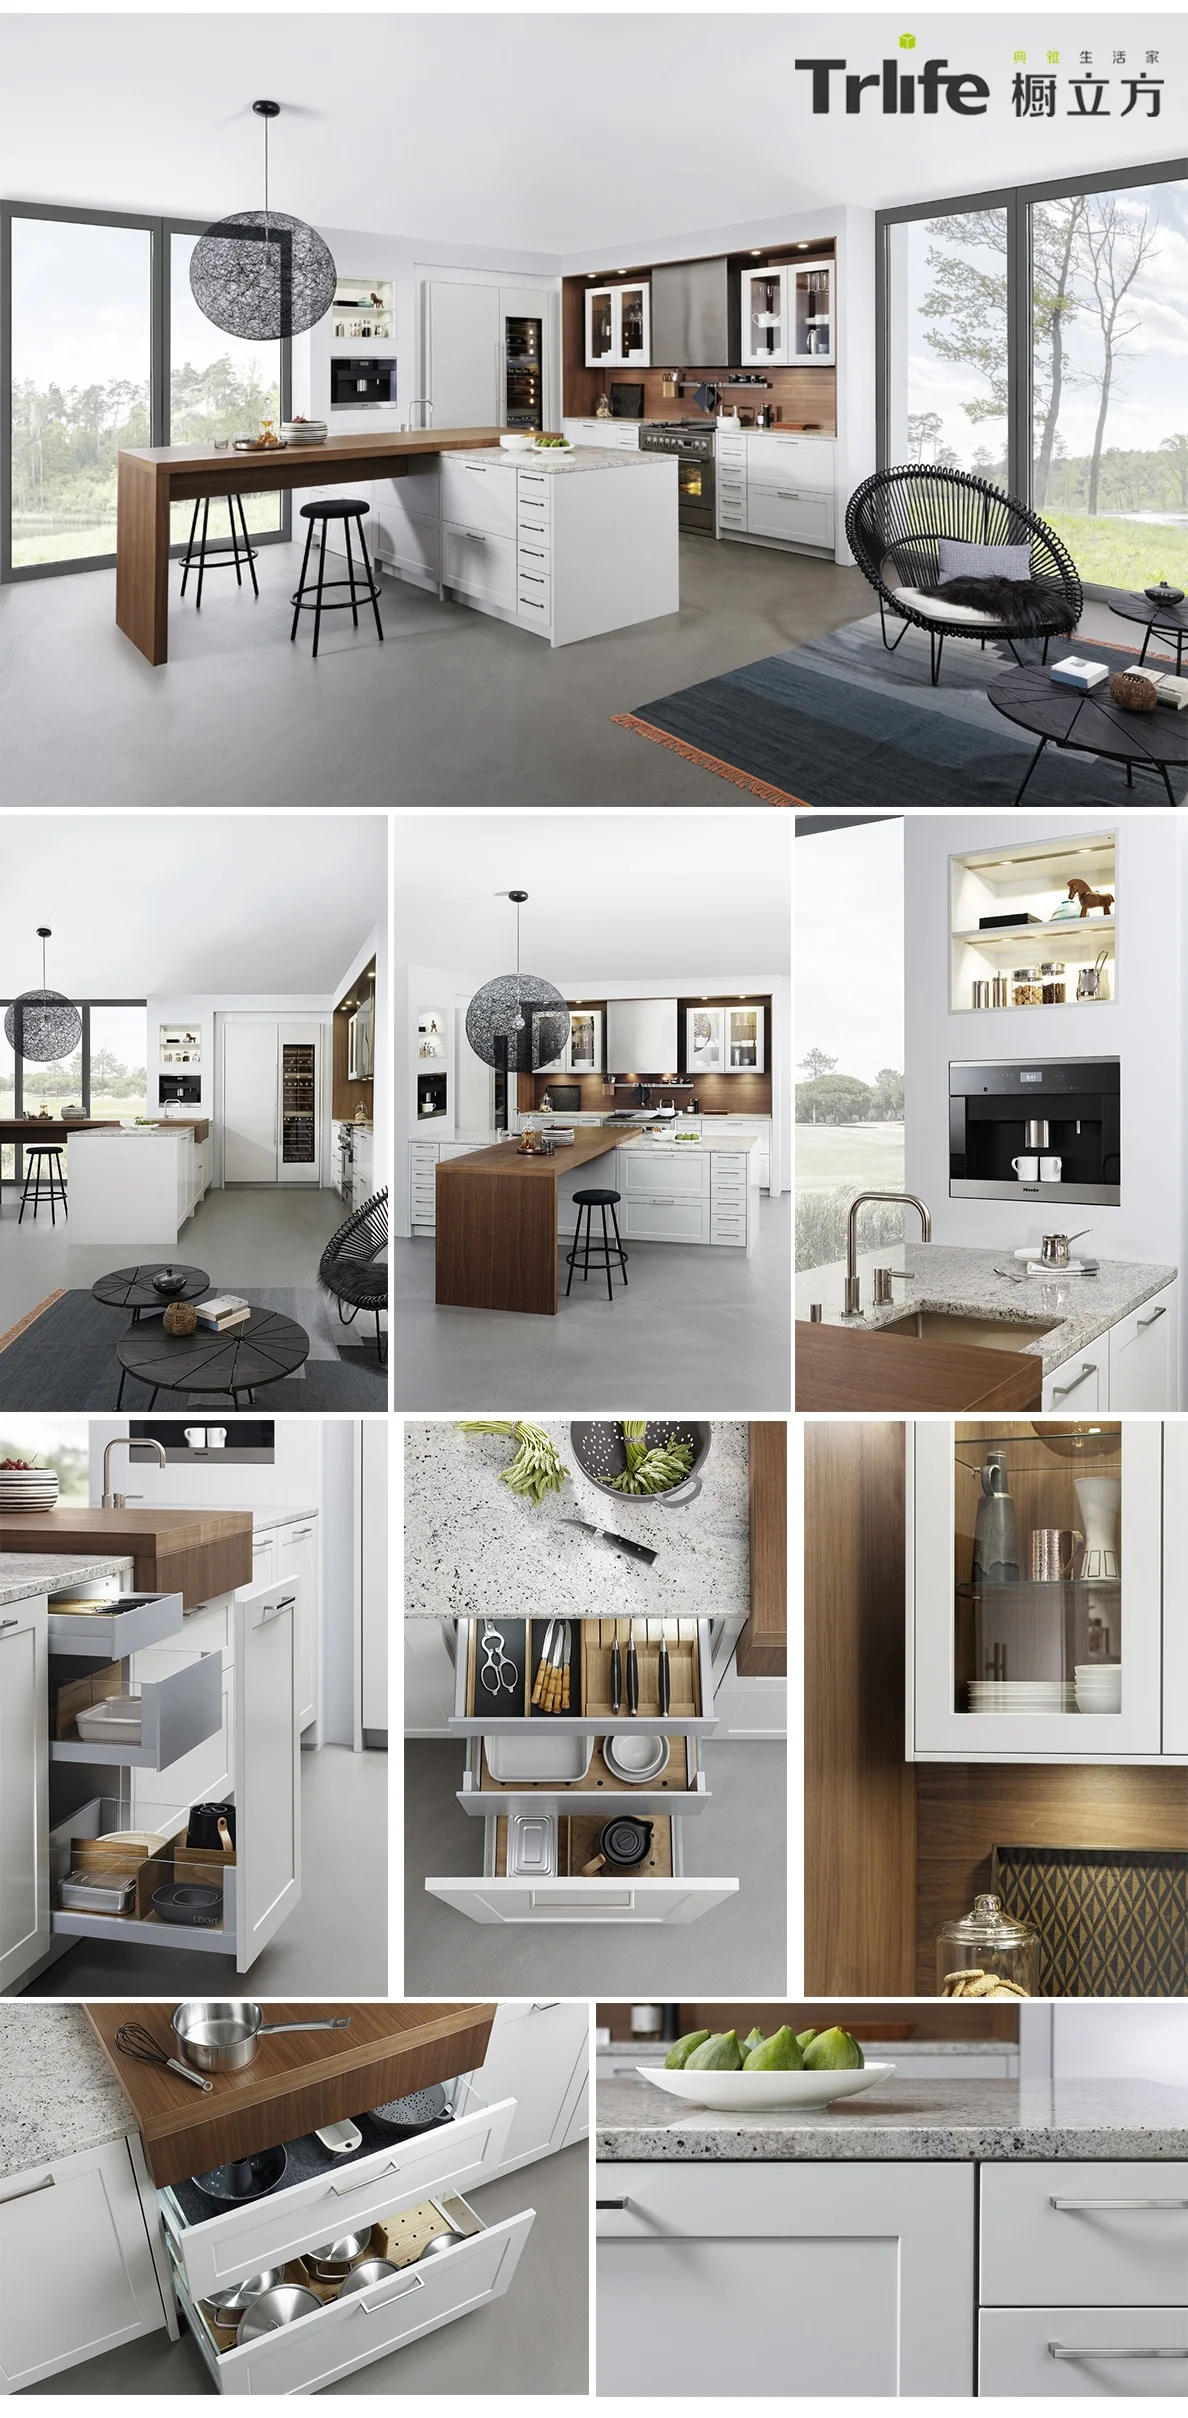 China factory direct affordable modern minimalist kitchen cabinet design